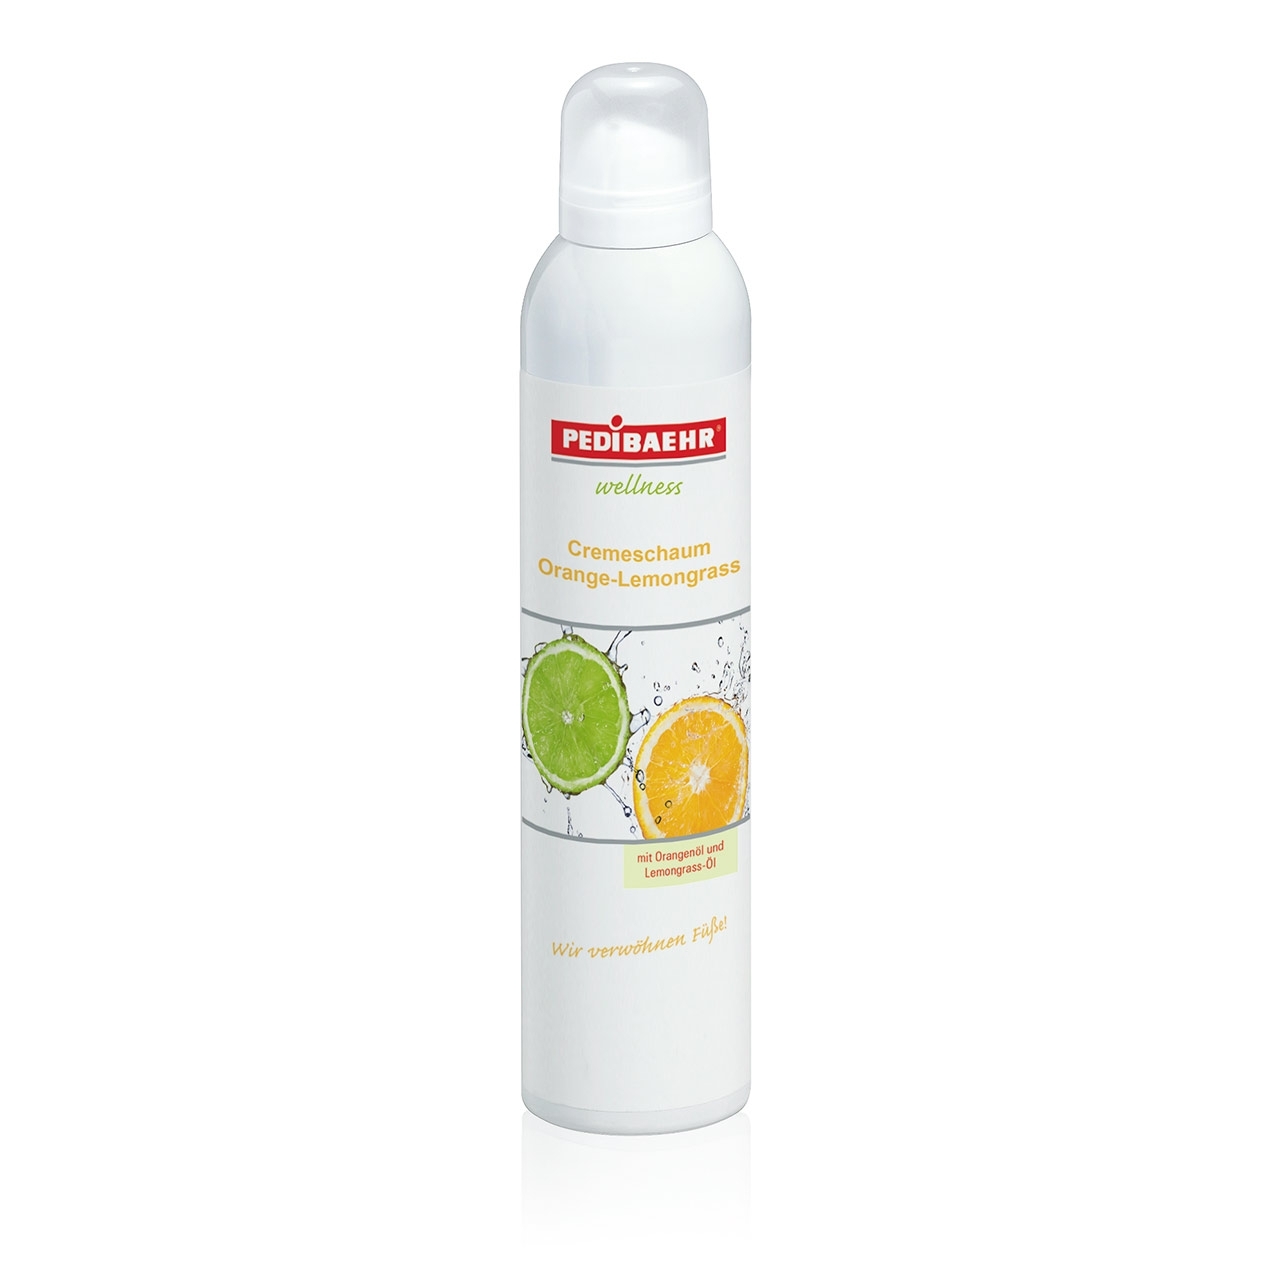 PEDIBAEHR Cremeschaum Orange-Lemongrass 300 ml